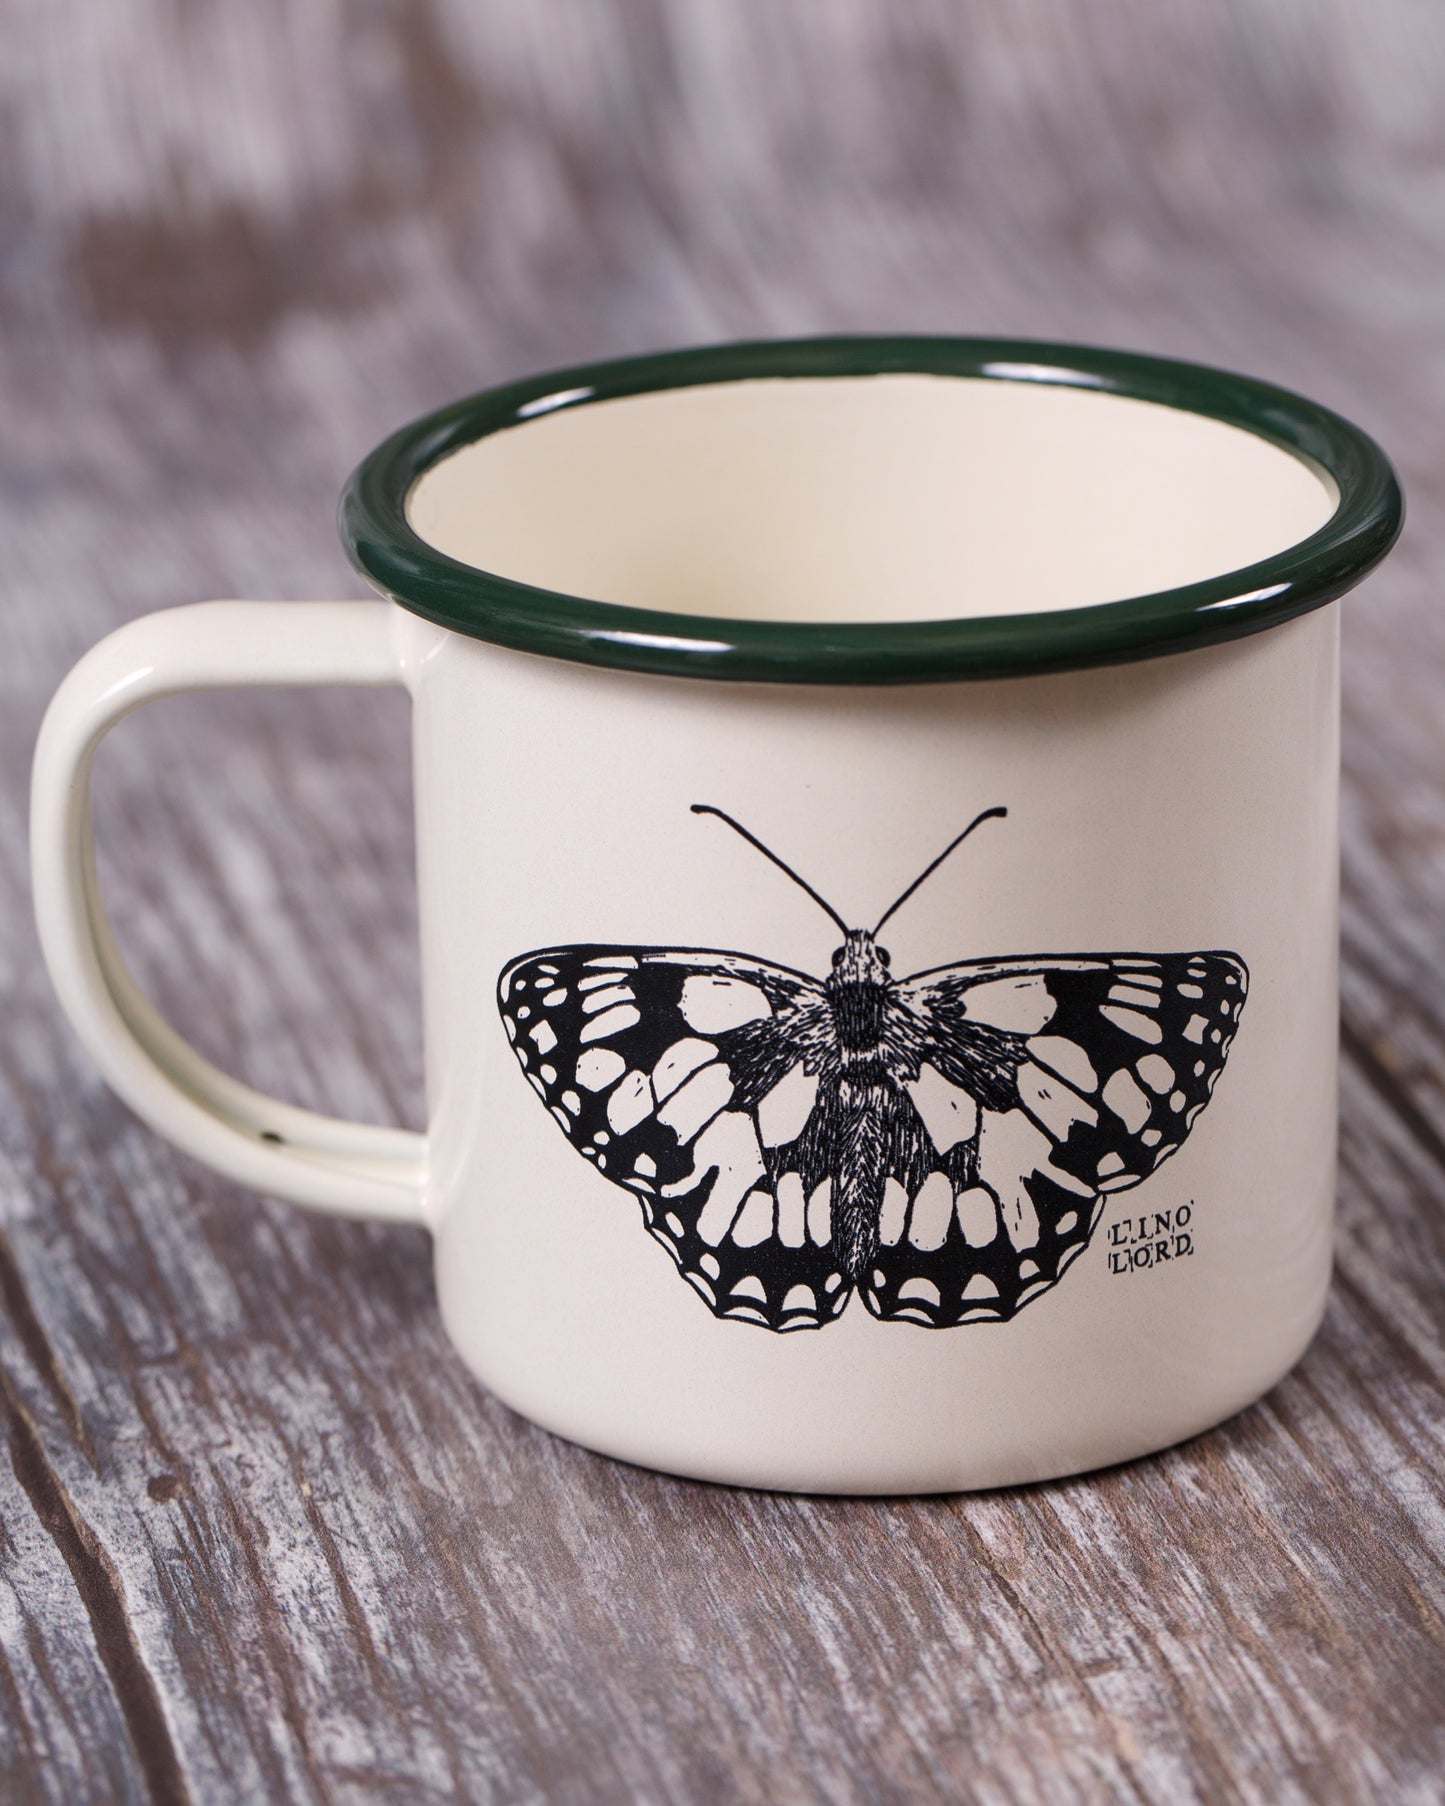 Cream Enamel Mug with Butterfly Design